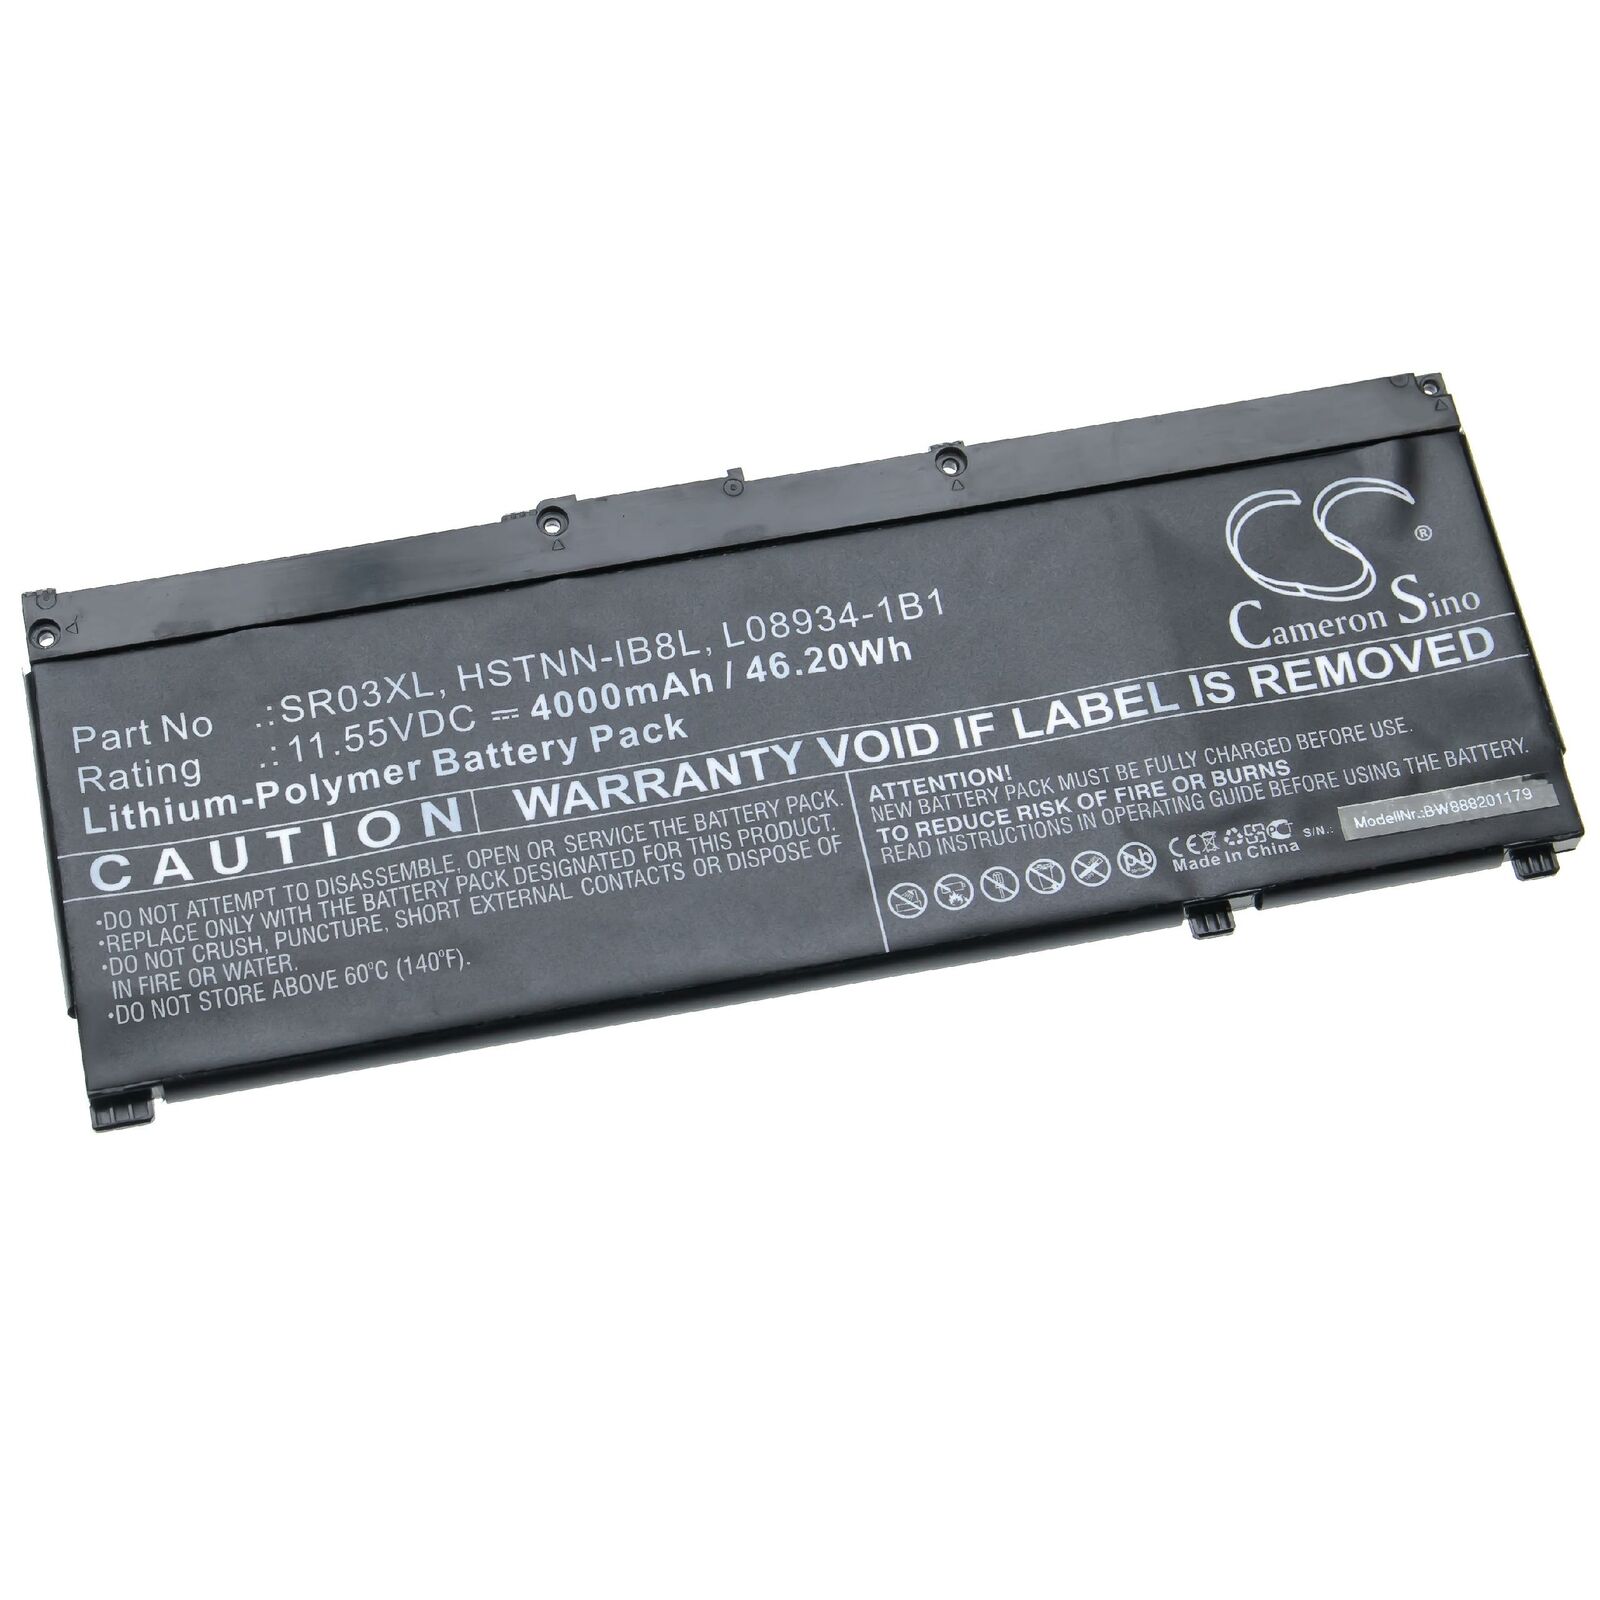 HP 11.55V HSTNN-IB8L, L08855-855, L08934-1B1, SR03XL compatible battery